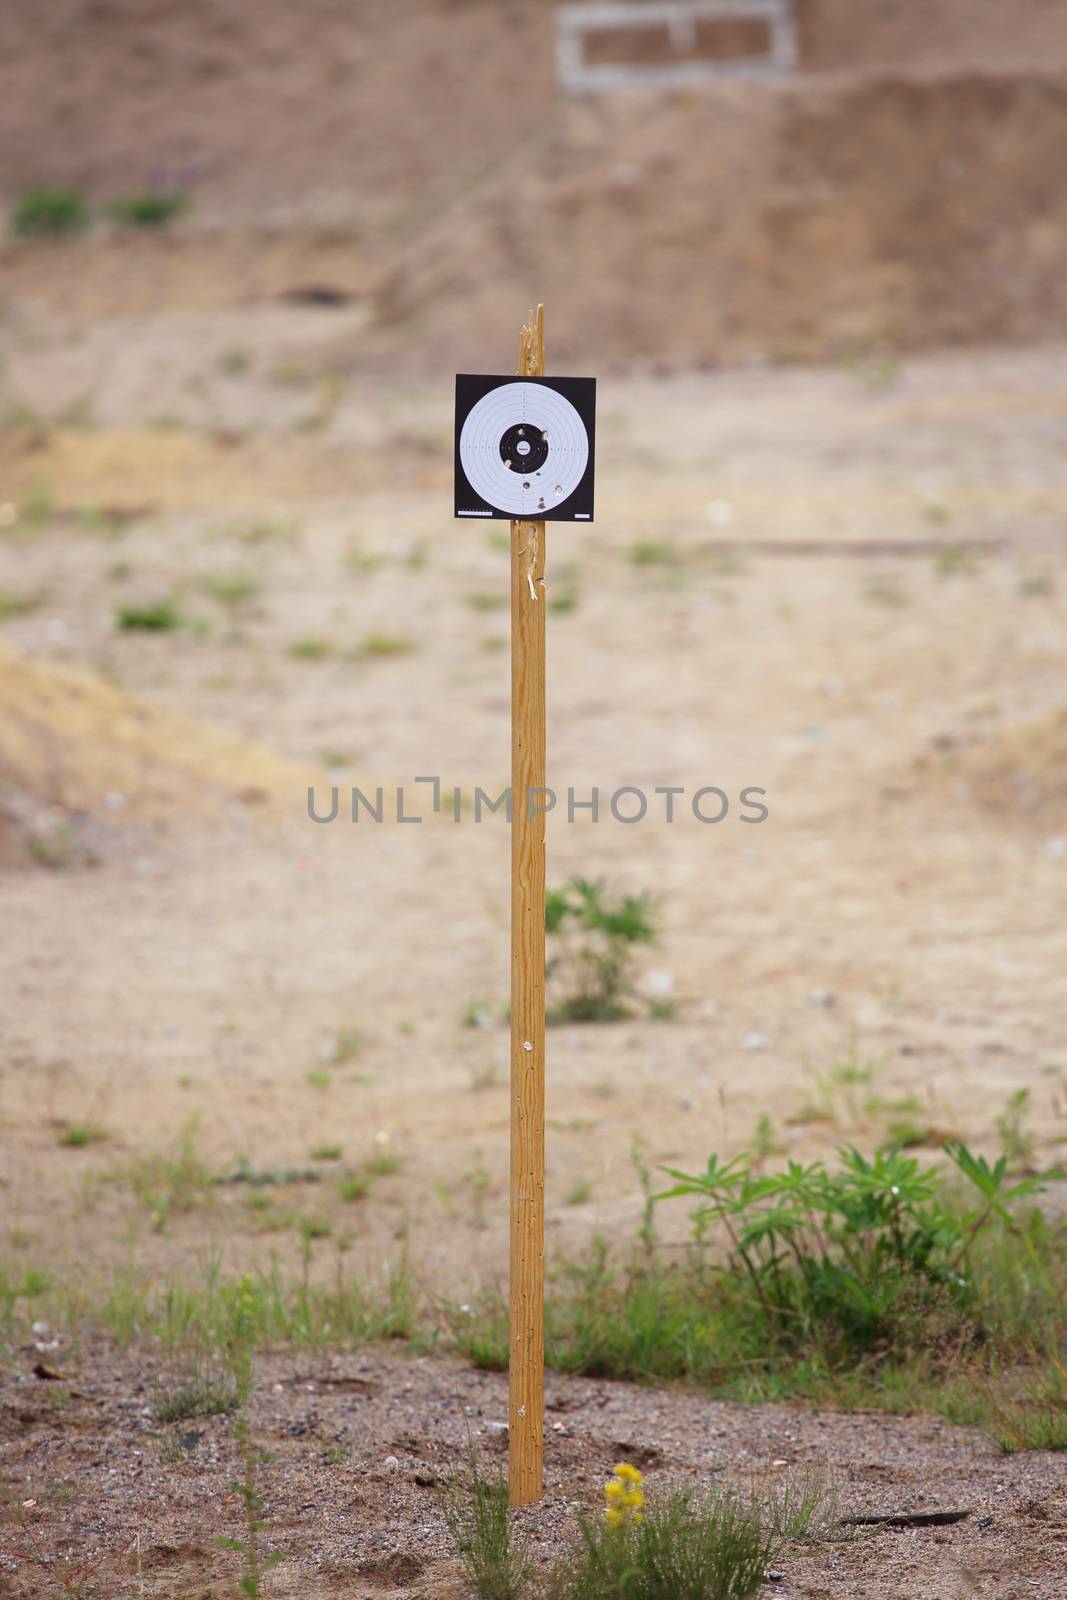 Targets on shooting range by destillat